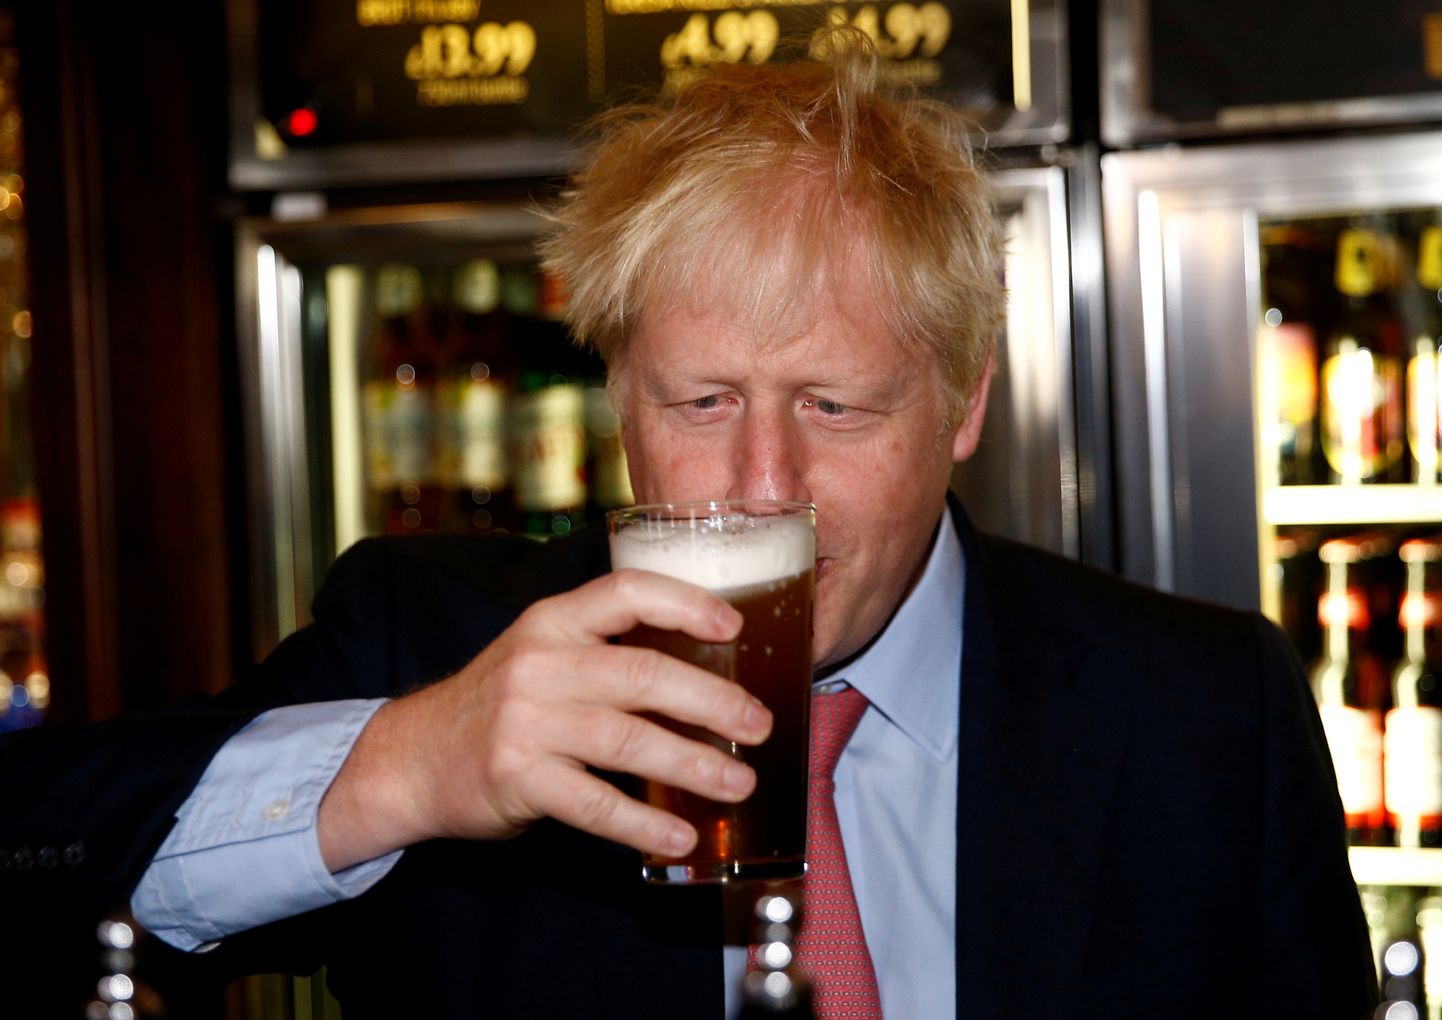 Briti konservatiivne poliitik Boris Johnson joomas 10. juulil 2019 õlut Londonis Metropolitan Bar pubis